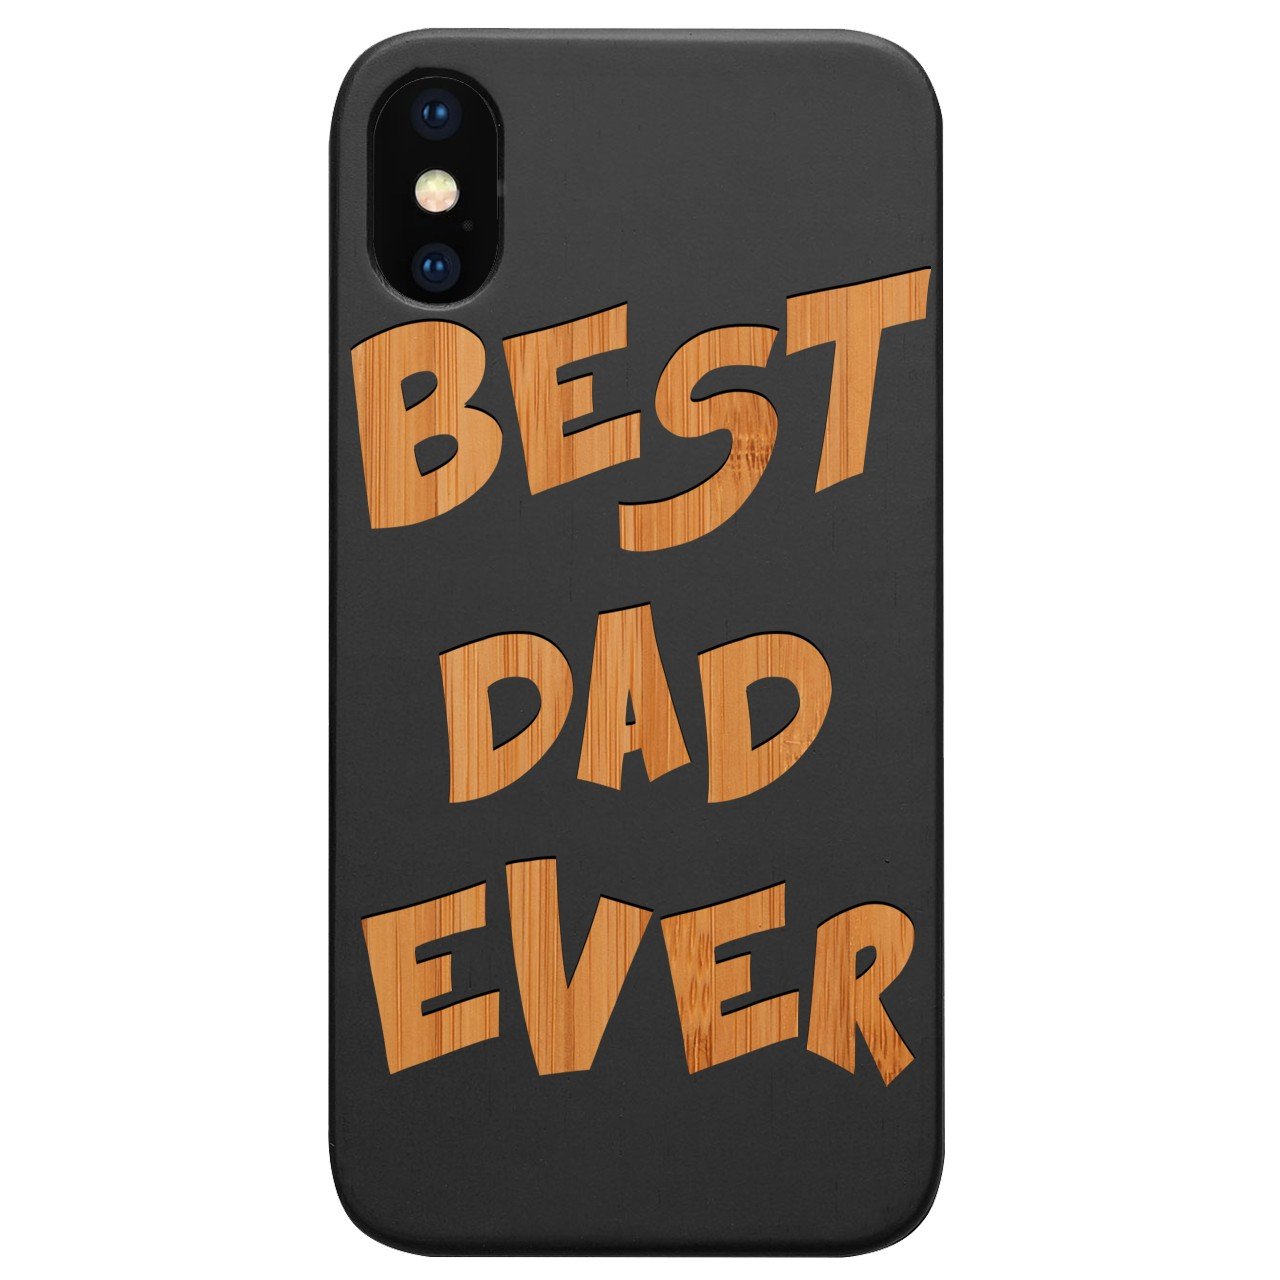 Best Dad Ever - Engraved - Wooden Phone Case